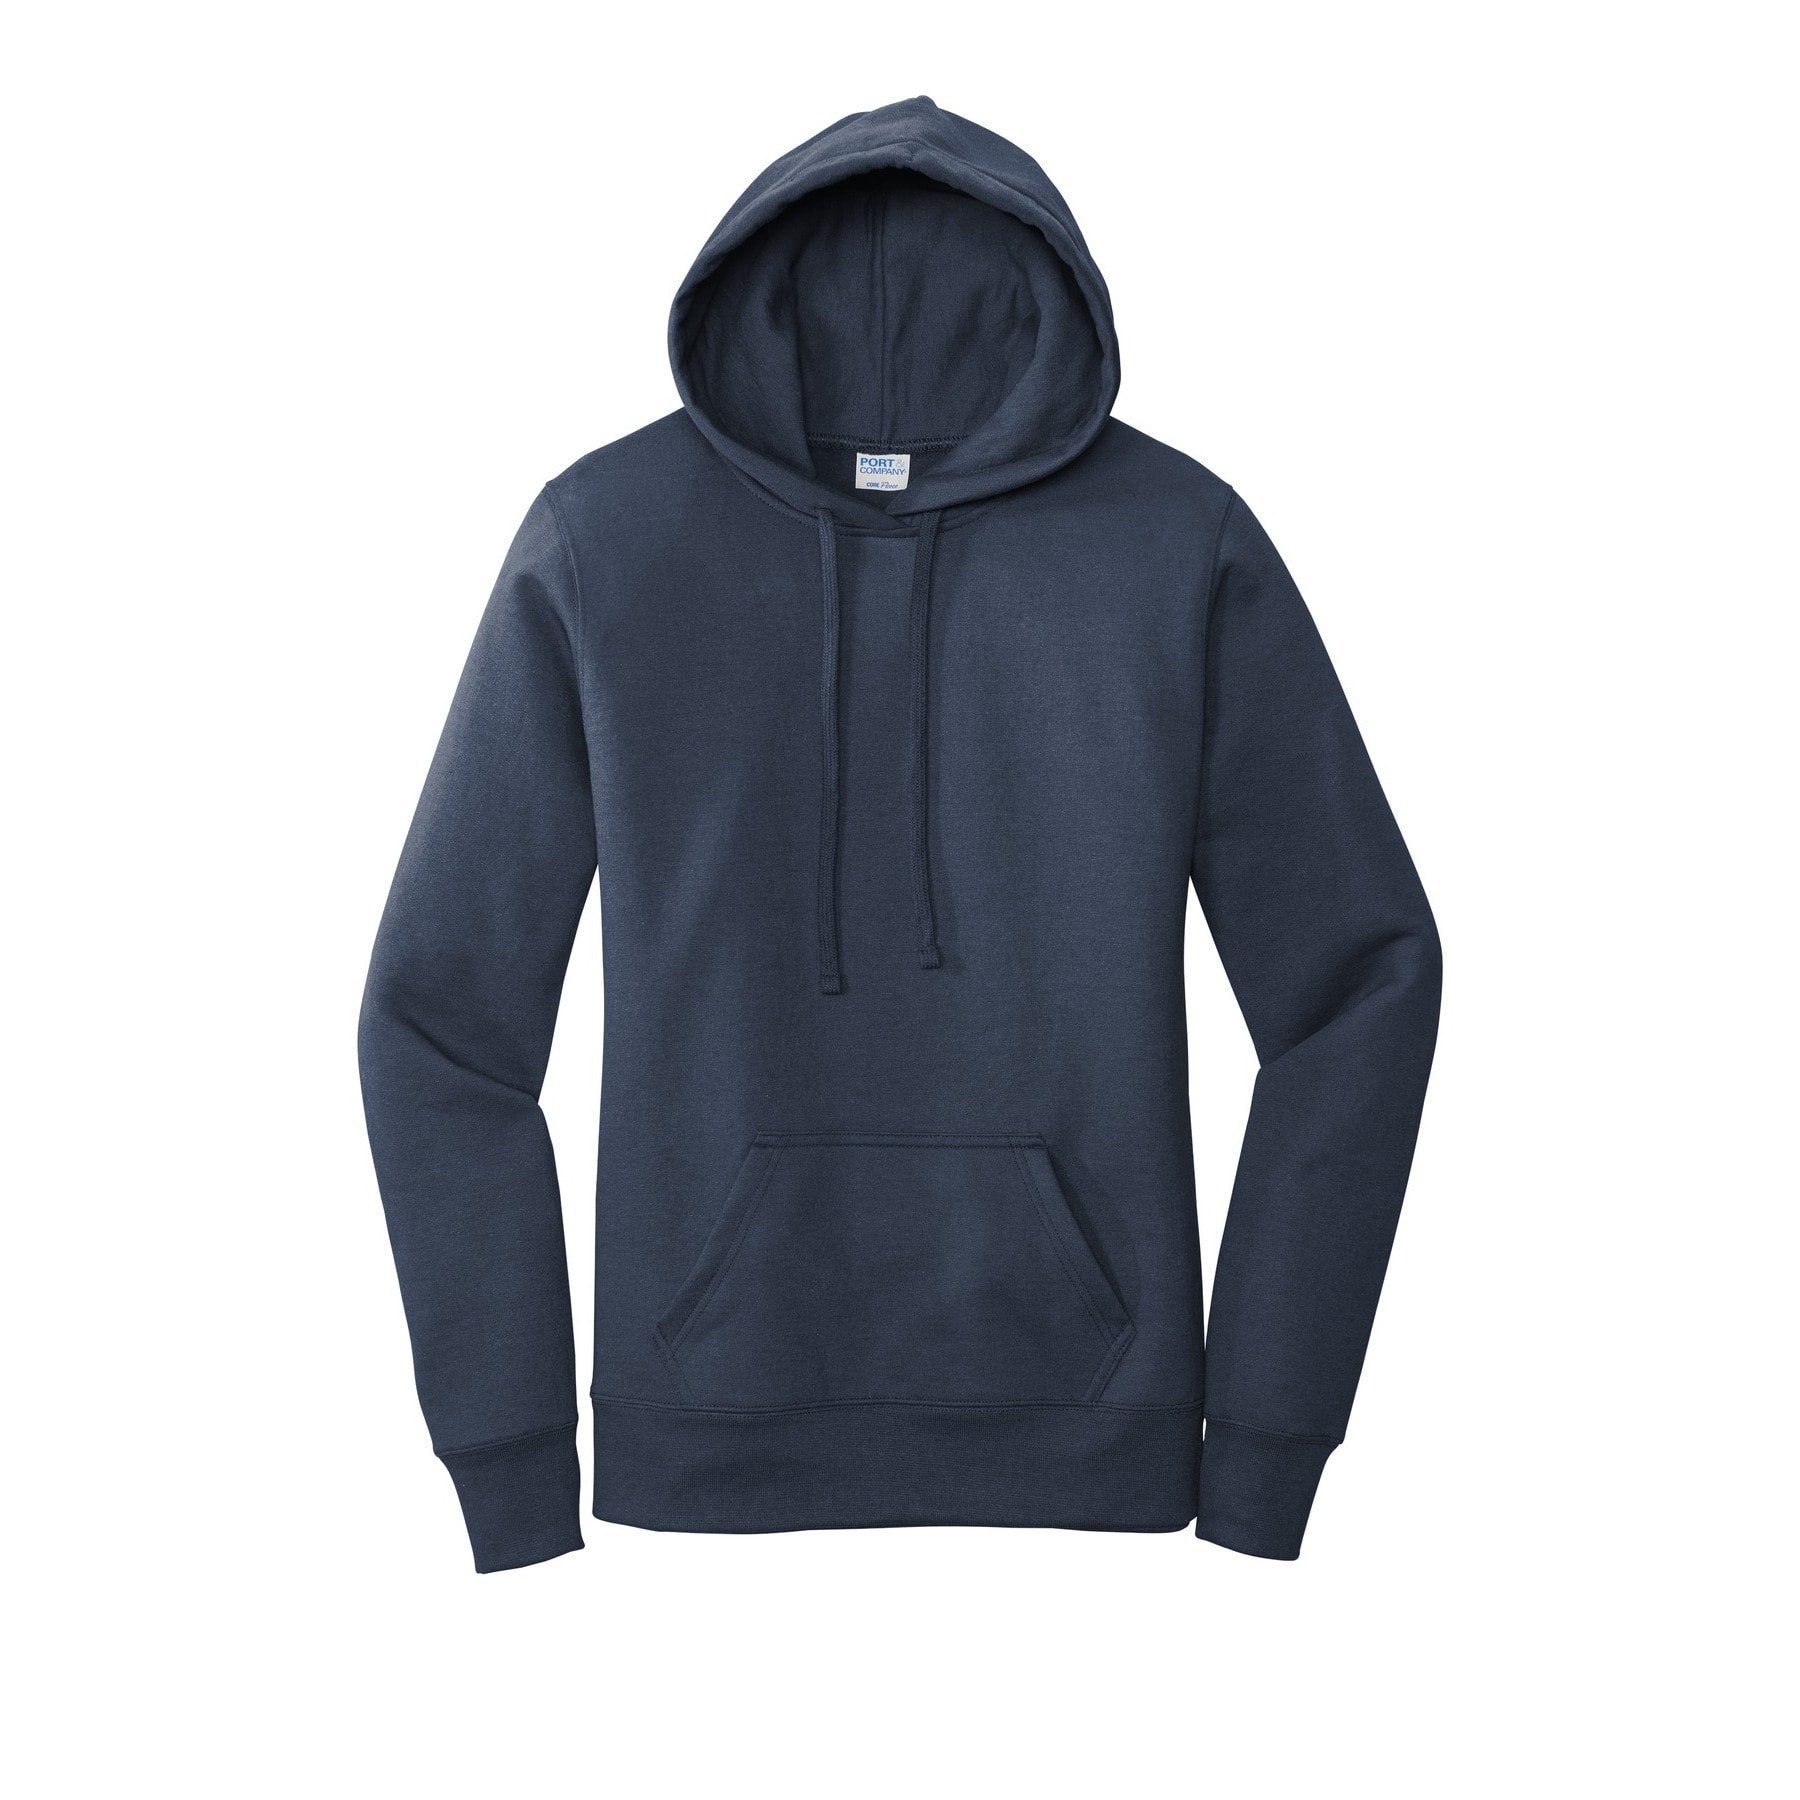 Port & Company® Hooded Pullover Ladies Core Fleece Sweatshirt